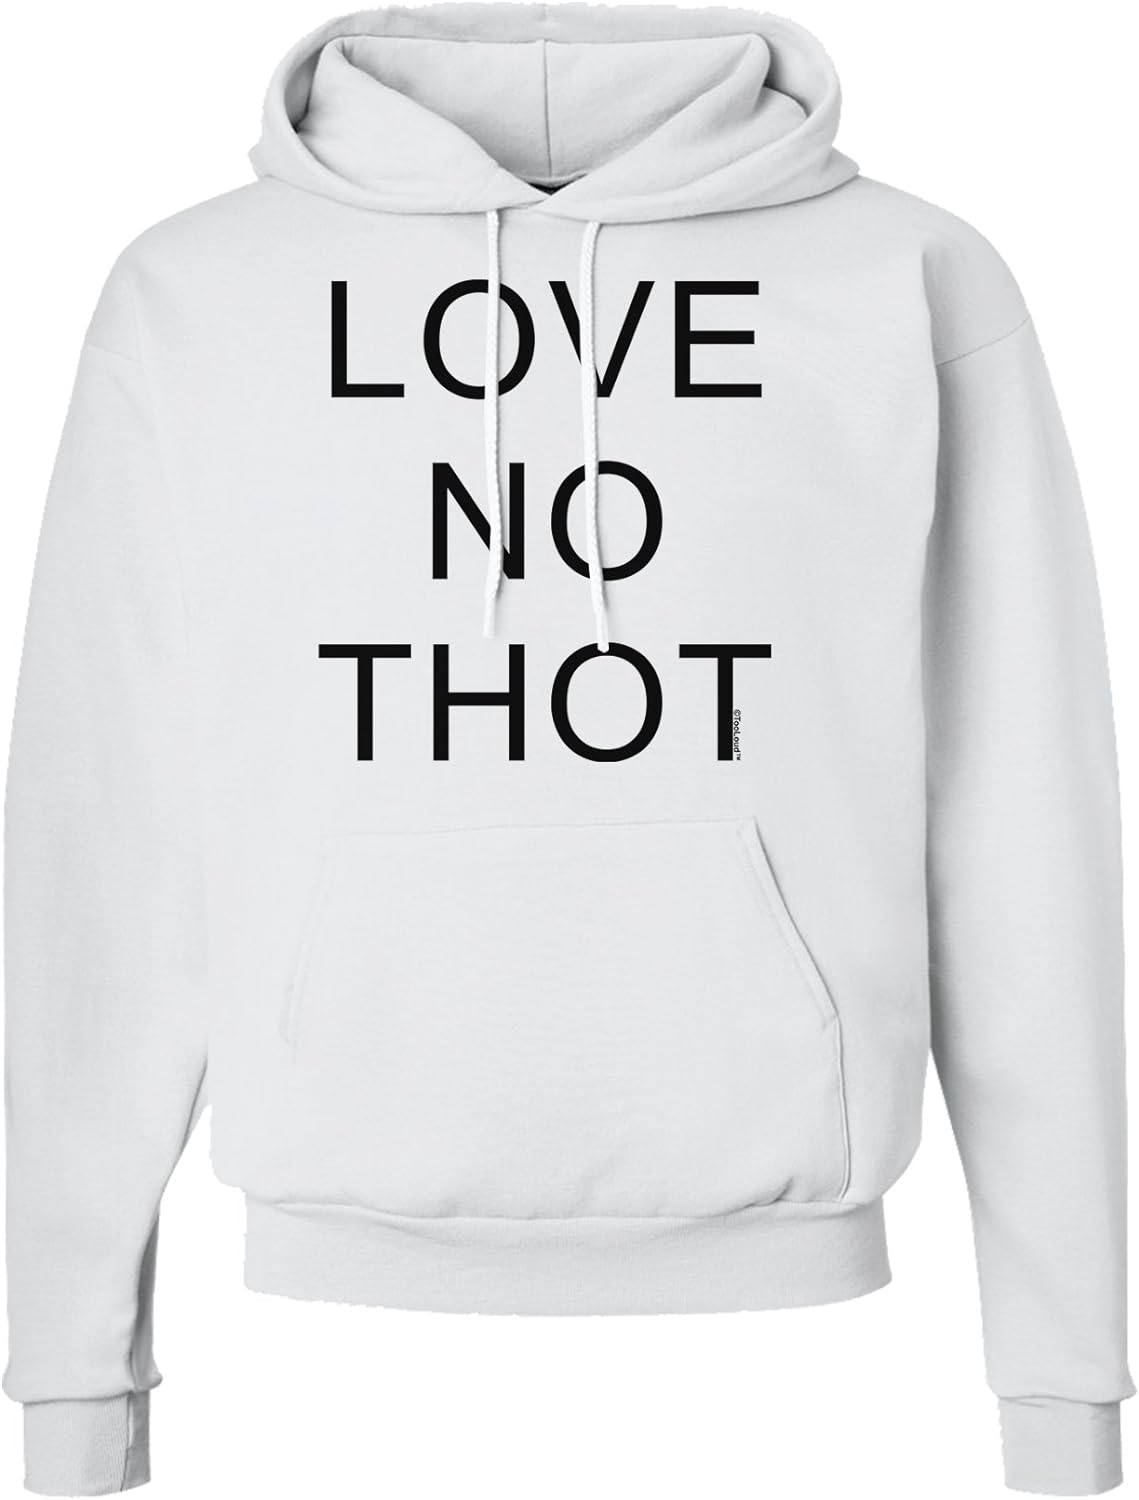 Love No Thot Sweater photo 20